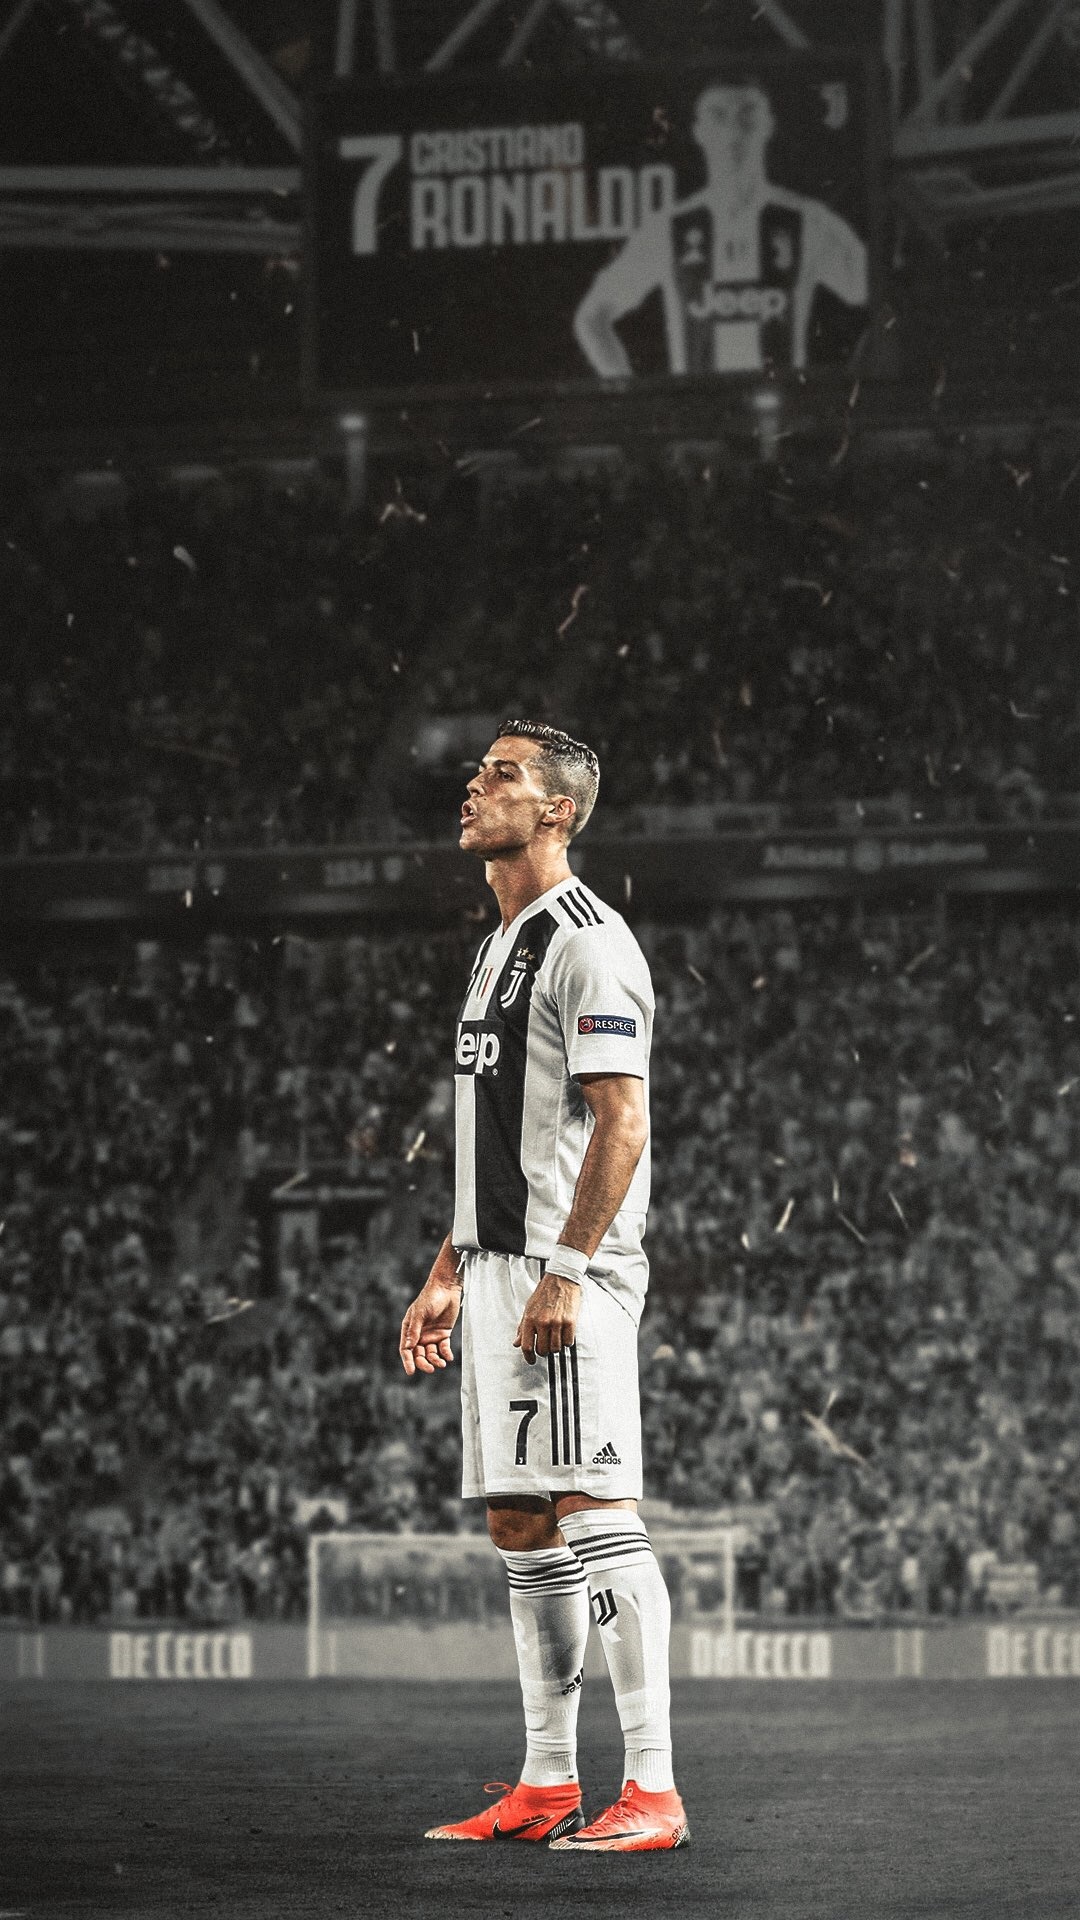 Top 55 Cristiano Ronaldo iPhone Wallpapers Download [ HD